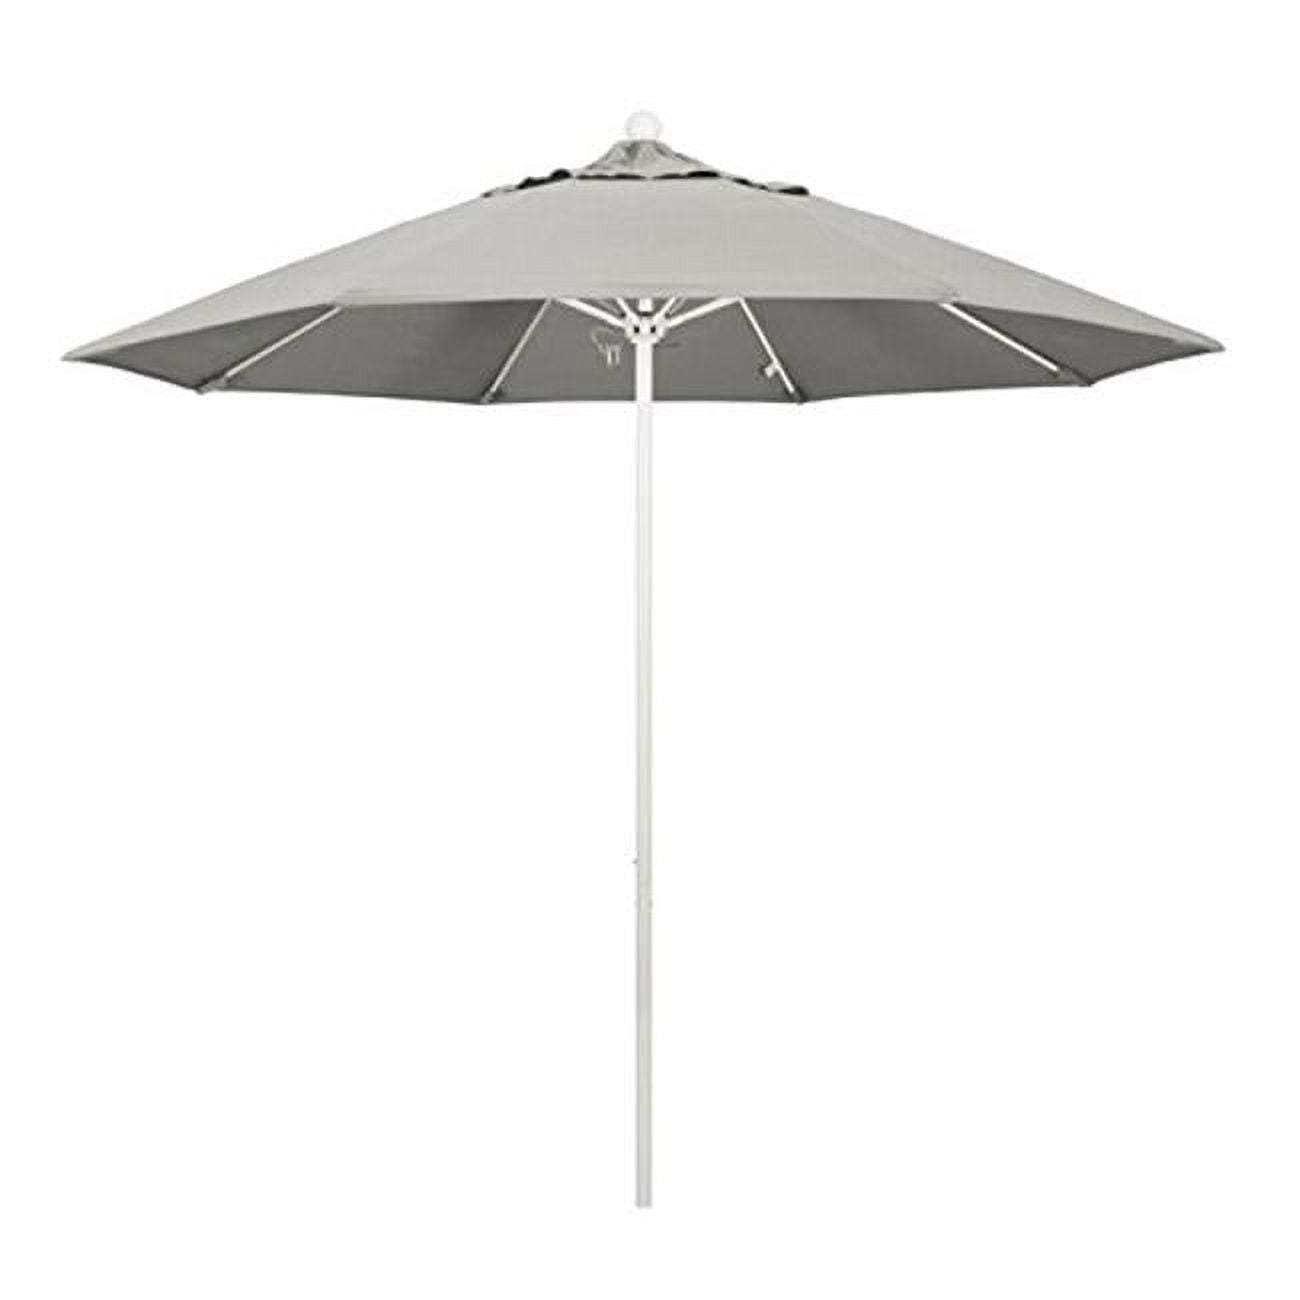 Alto908170-5402 9 Ft. Round Aluminum & Fiberglass, Push Open & White Pole - Sunbrella Granite Umbrella